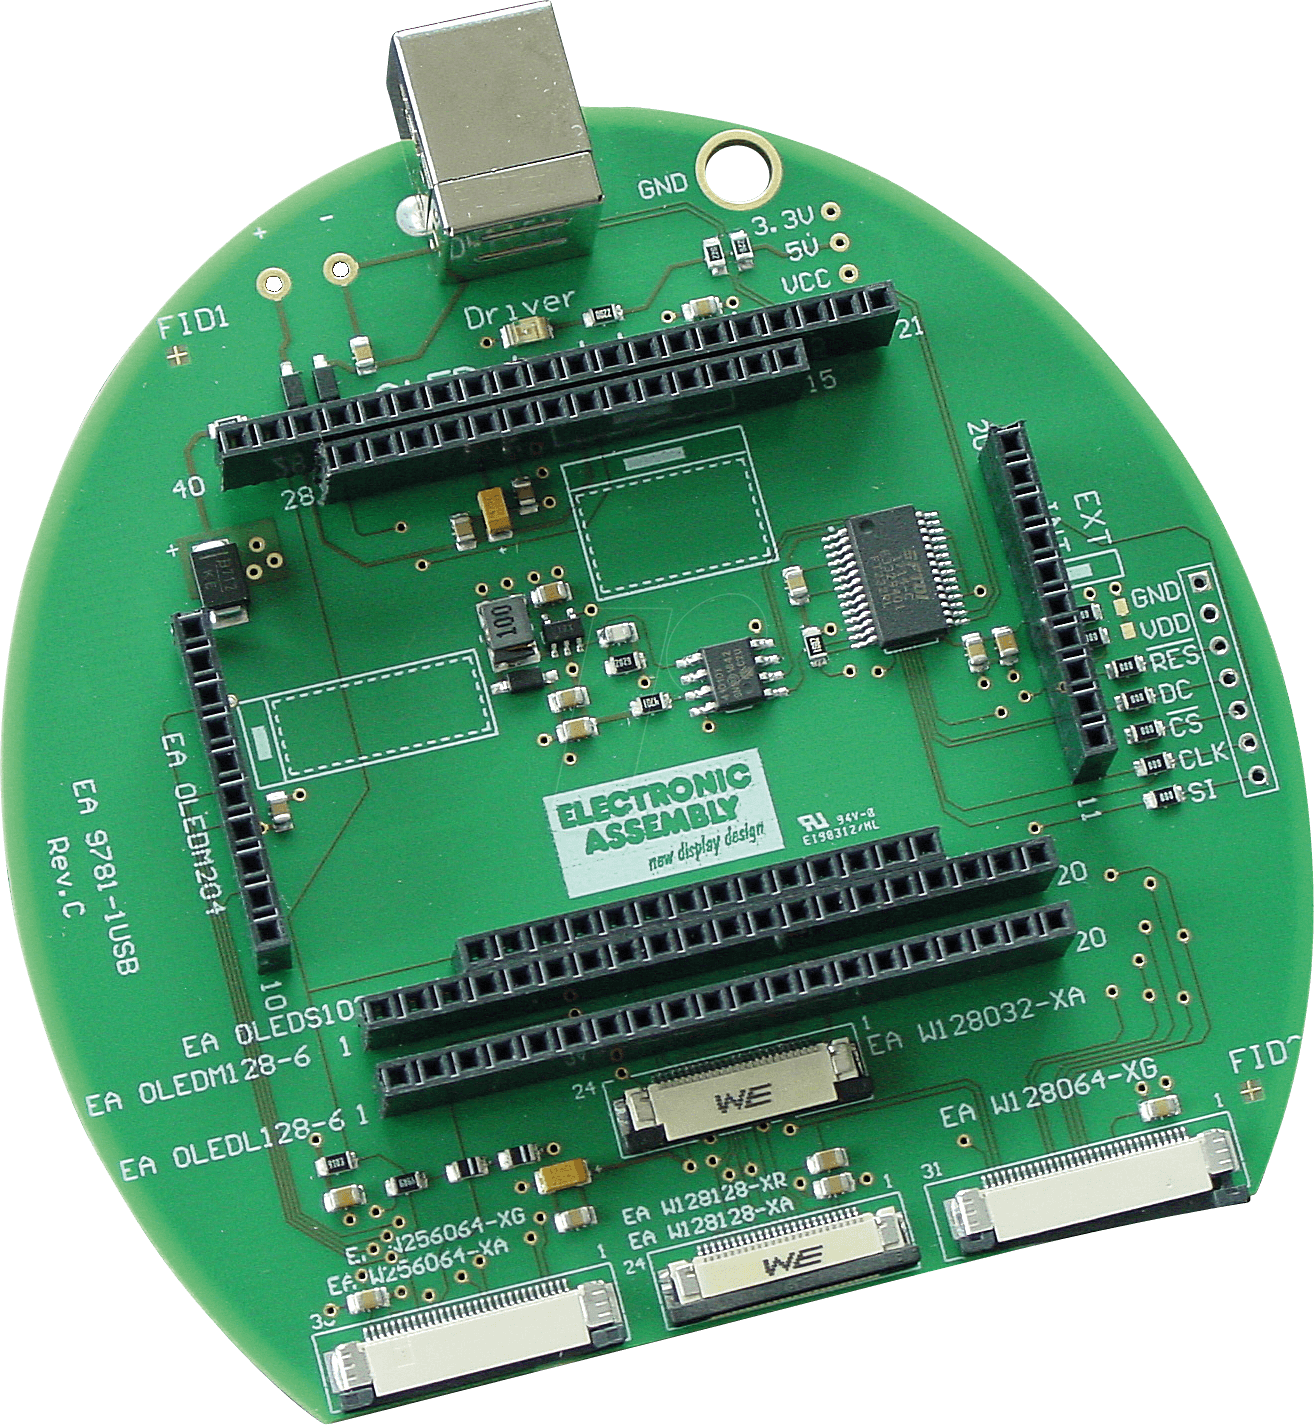 EA 9781-2USB - USB-Testboard für OLED von DISPLAY VISIONS